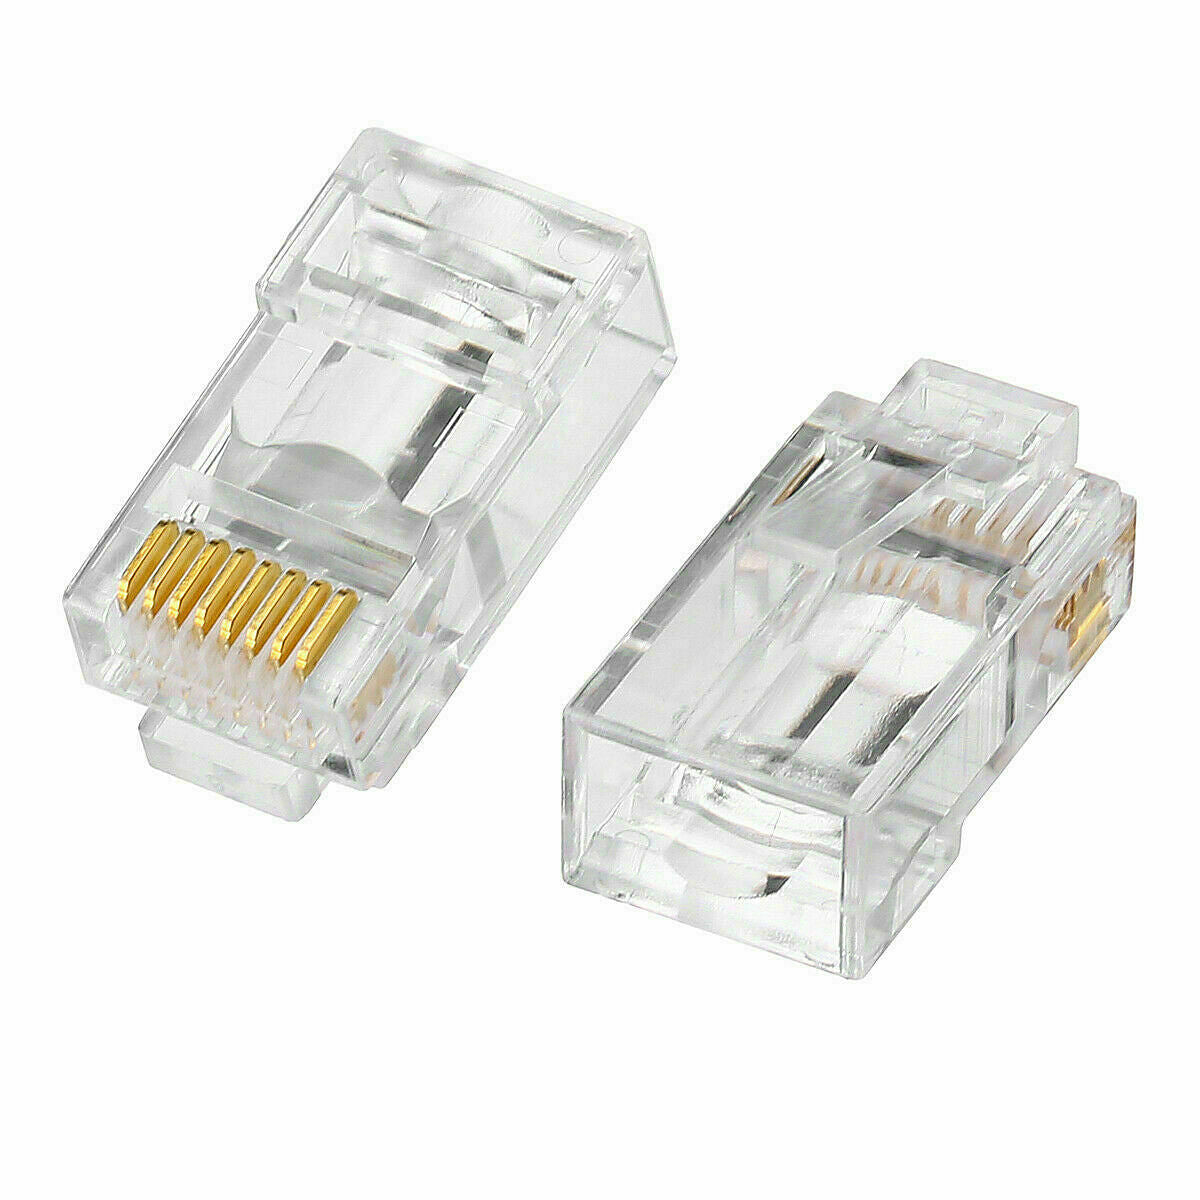 CAT5e RJ45 Connector Pass-Through Ethernet Cable